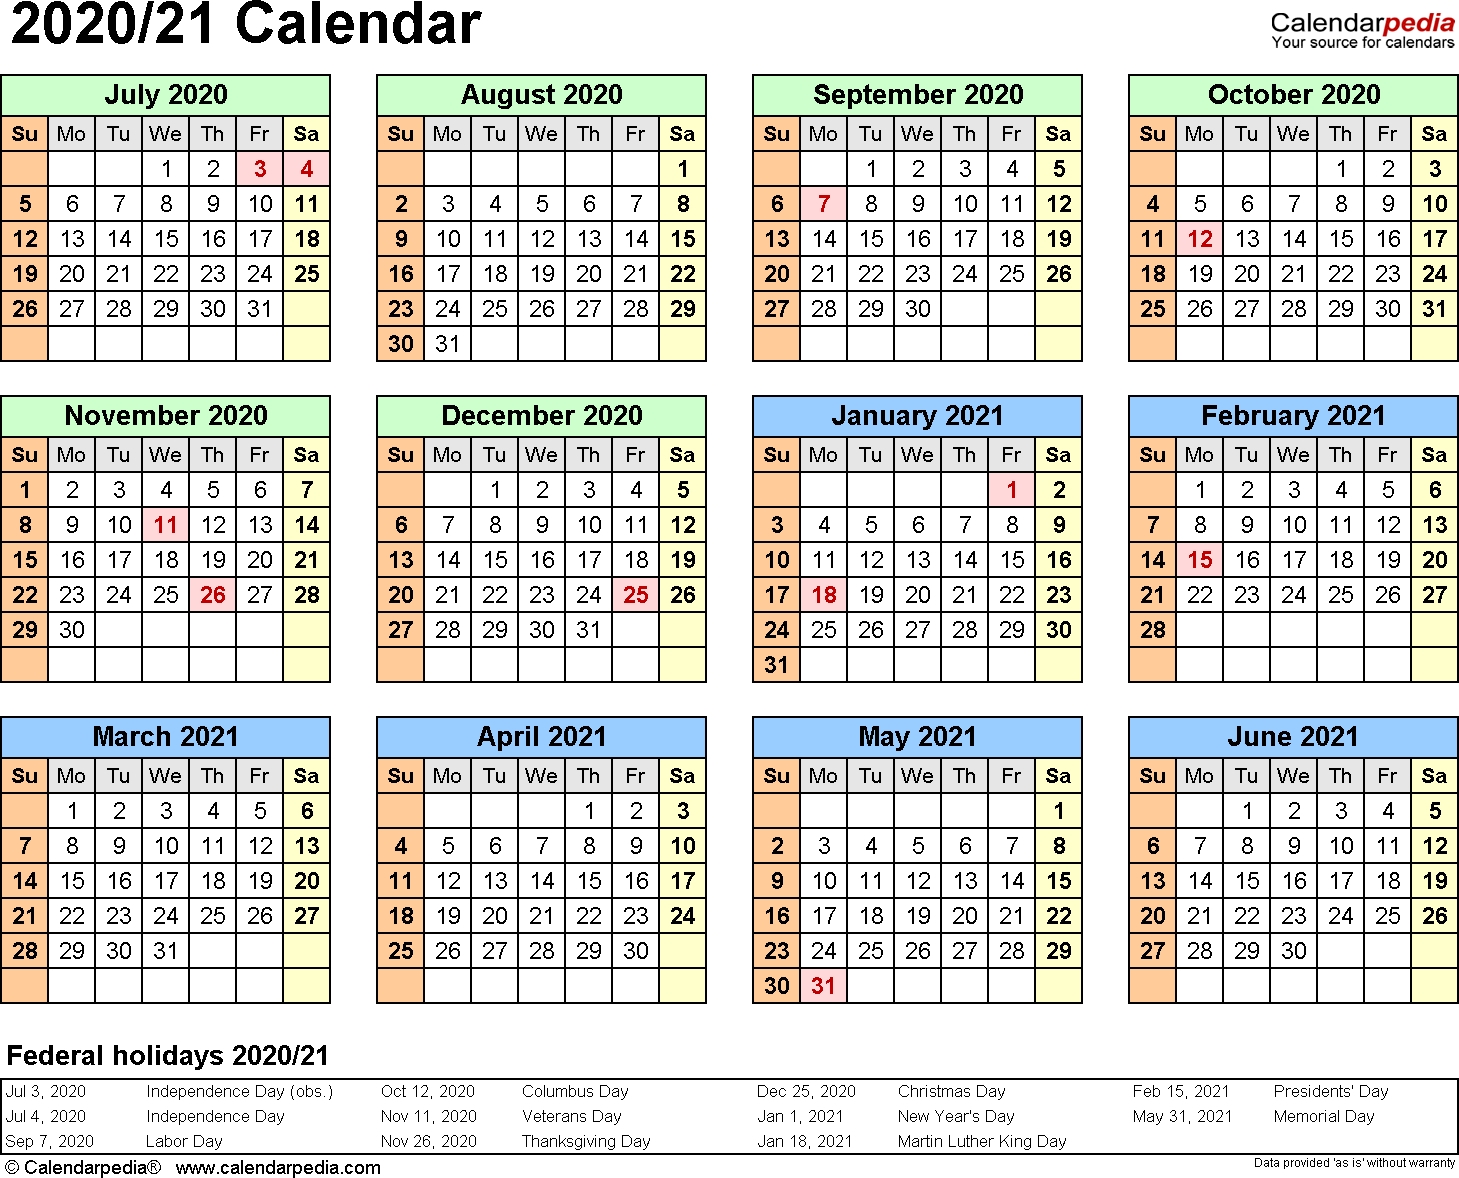 Get 2021 Calendar Template Excel